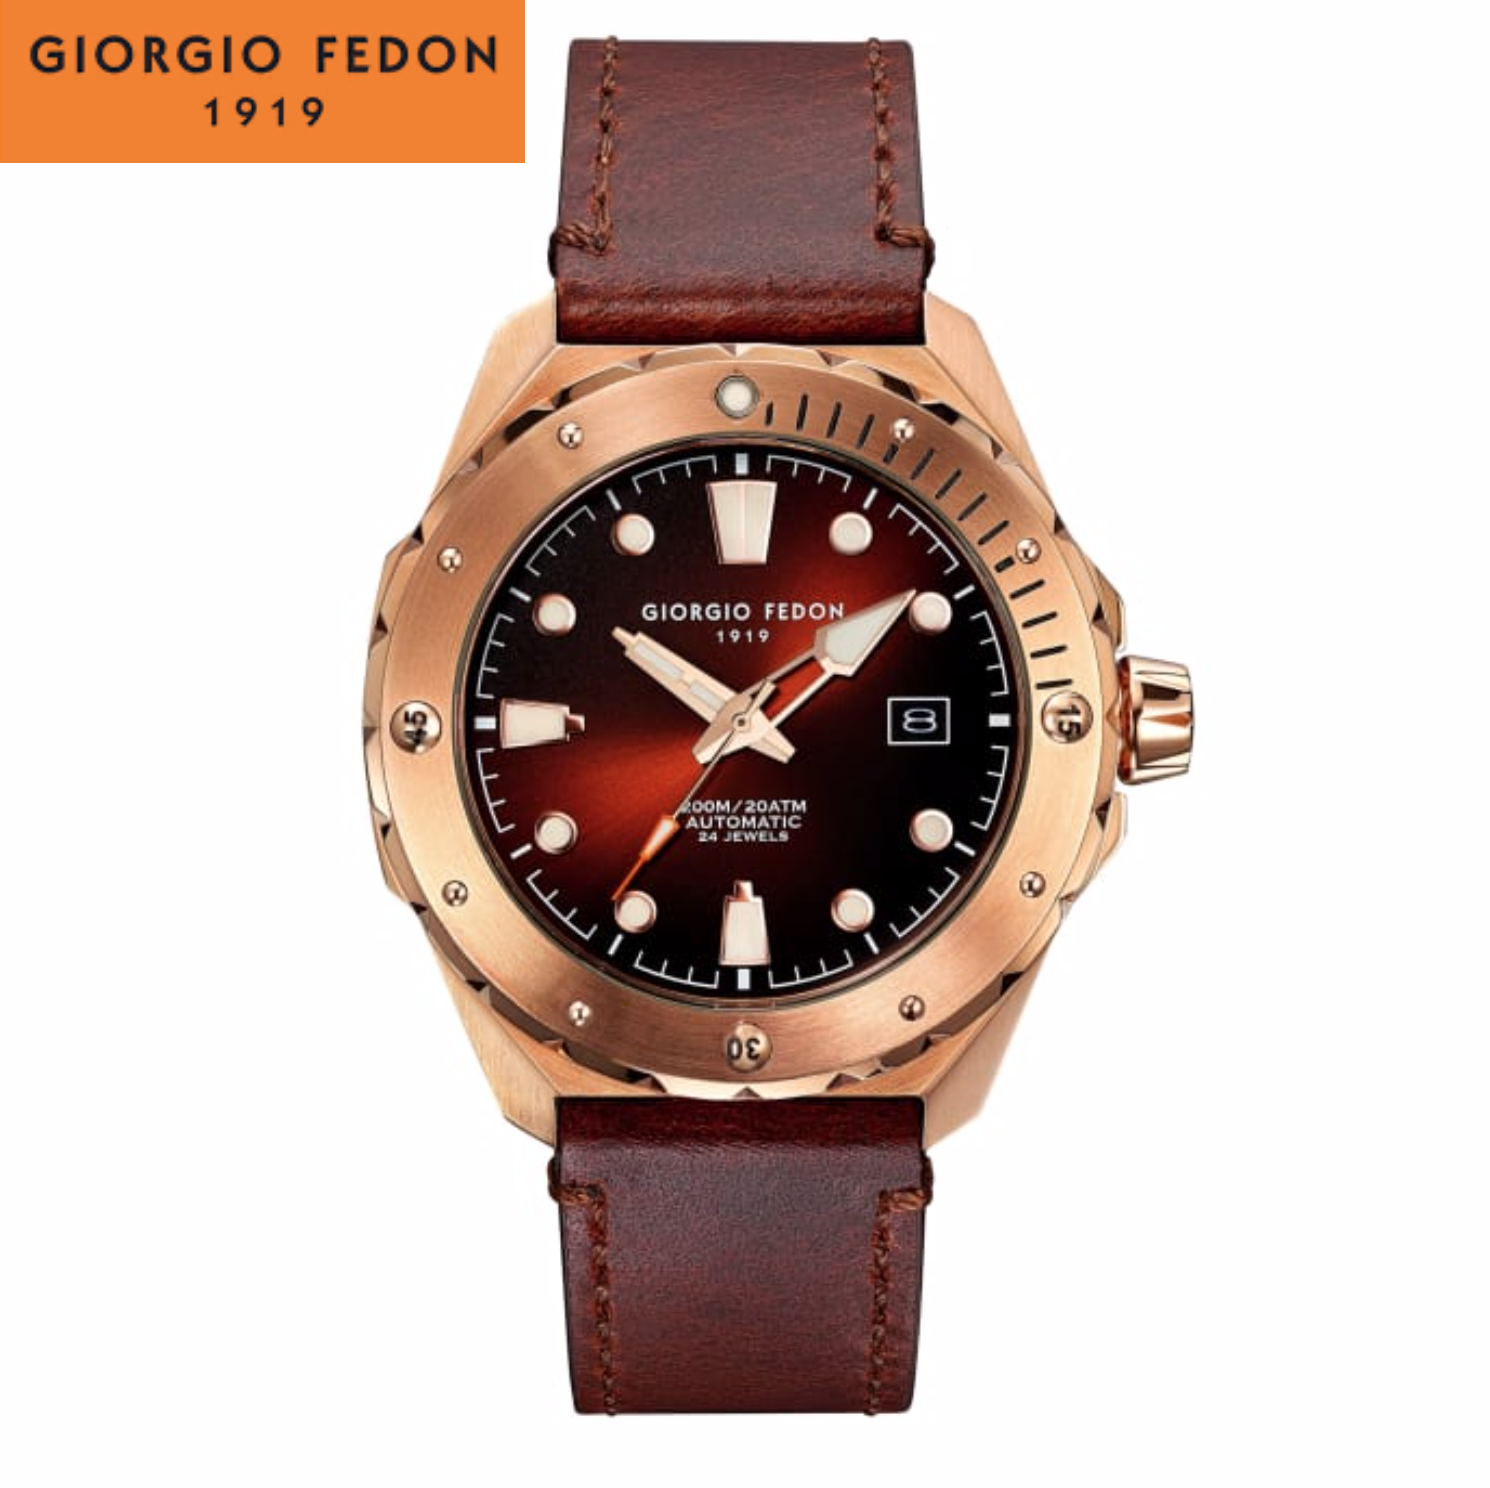 Giorgio Fedon 喬治菲登1919 Ocean Walker  海行者系列 機械腕錶 GFCJ006 玫瑰金/45mm